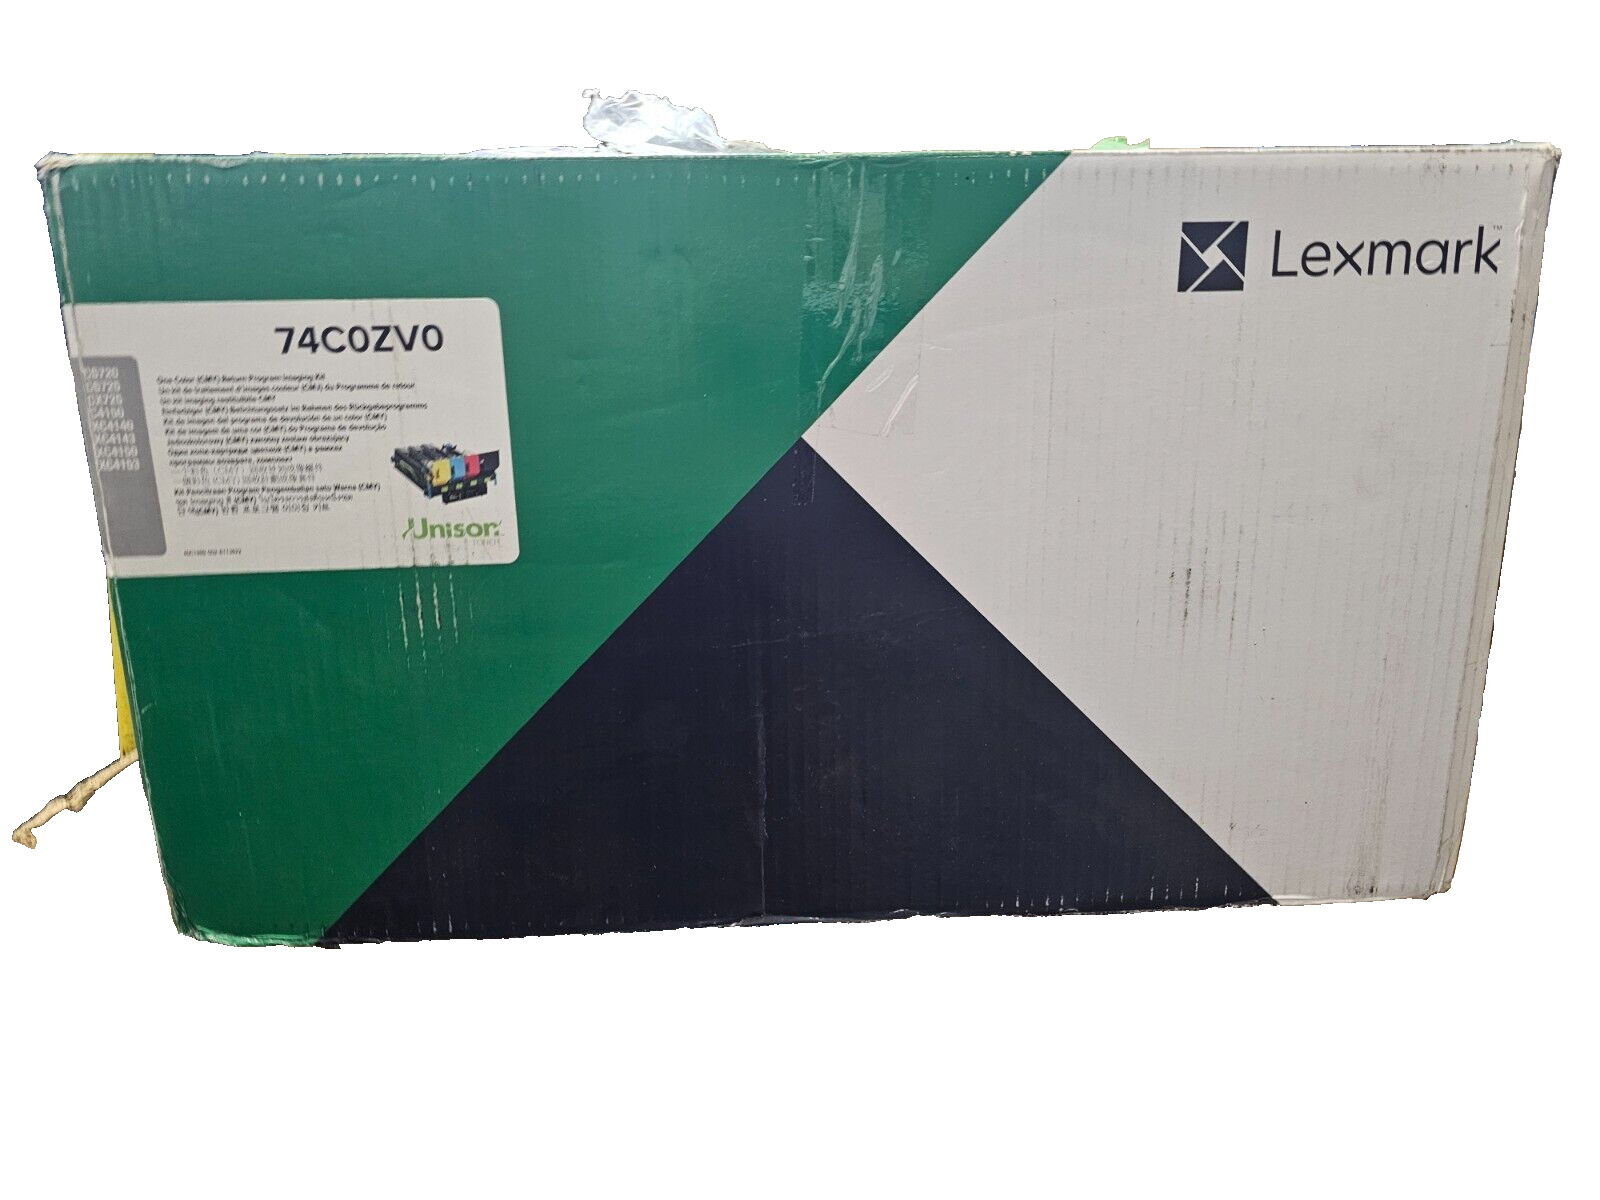 Lexmark Return Program Imaging Kit, Cyan/Magenta/Yellow (74C0ZV0)